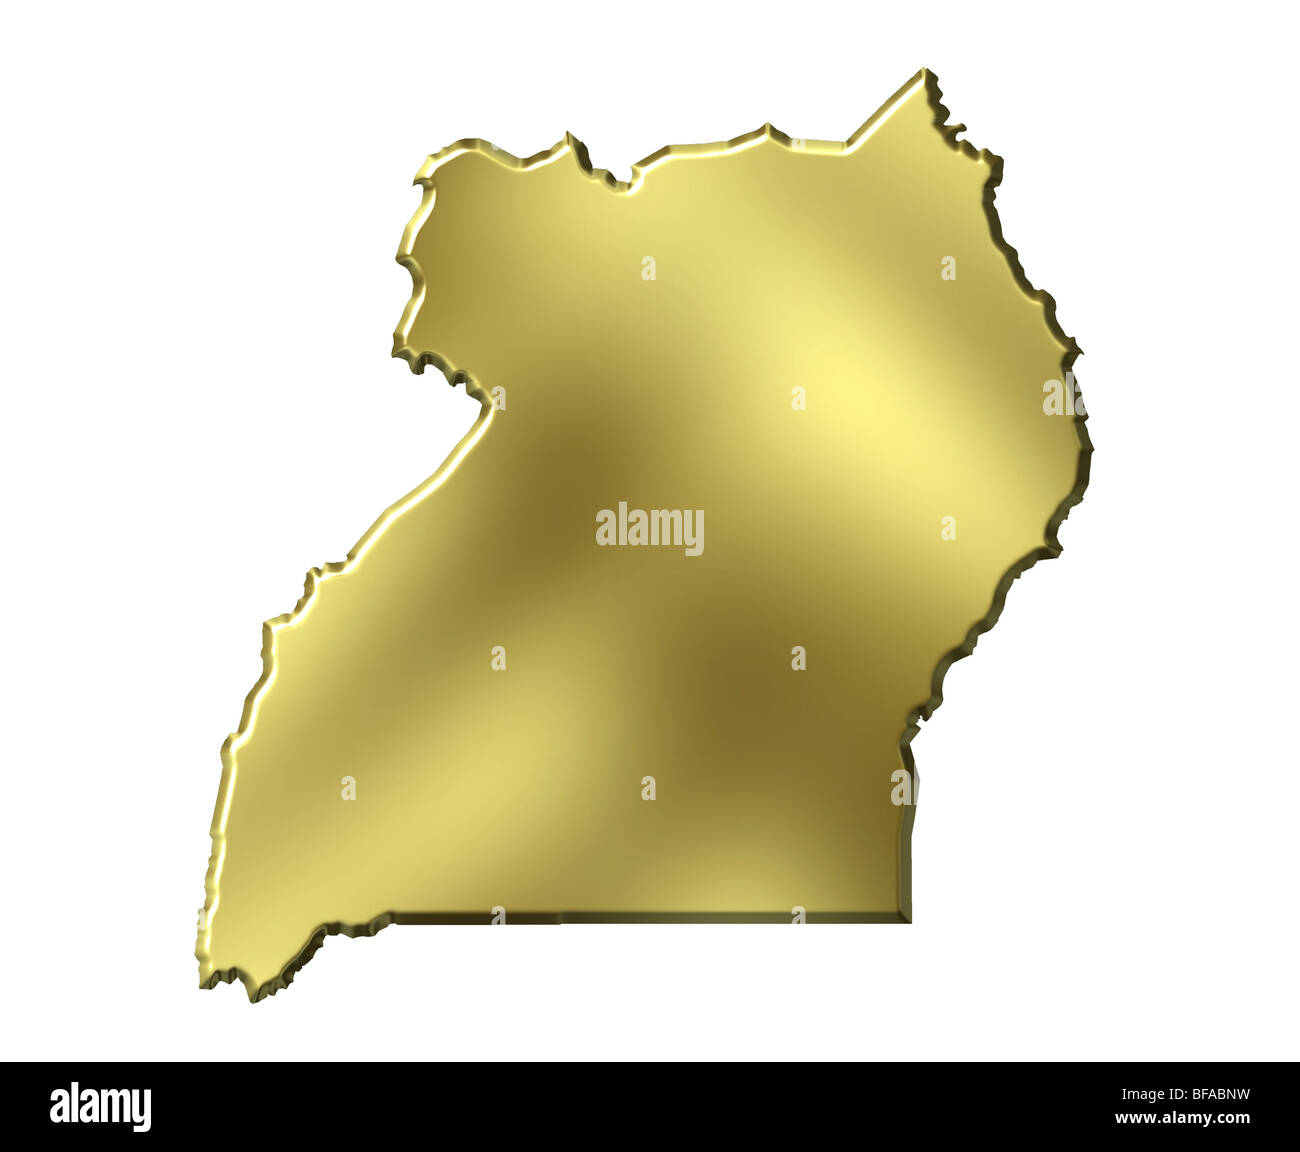 Uganda 3d golden map Stock Photo